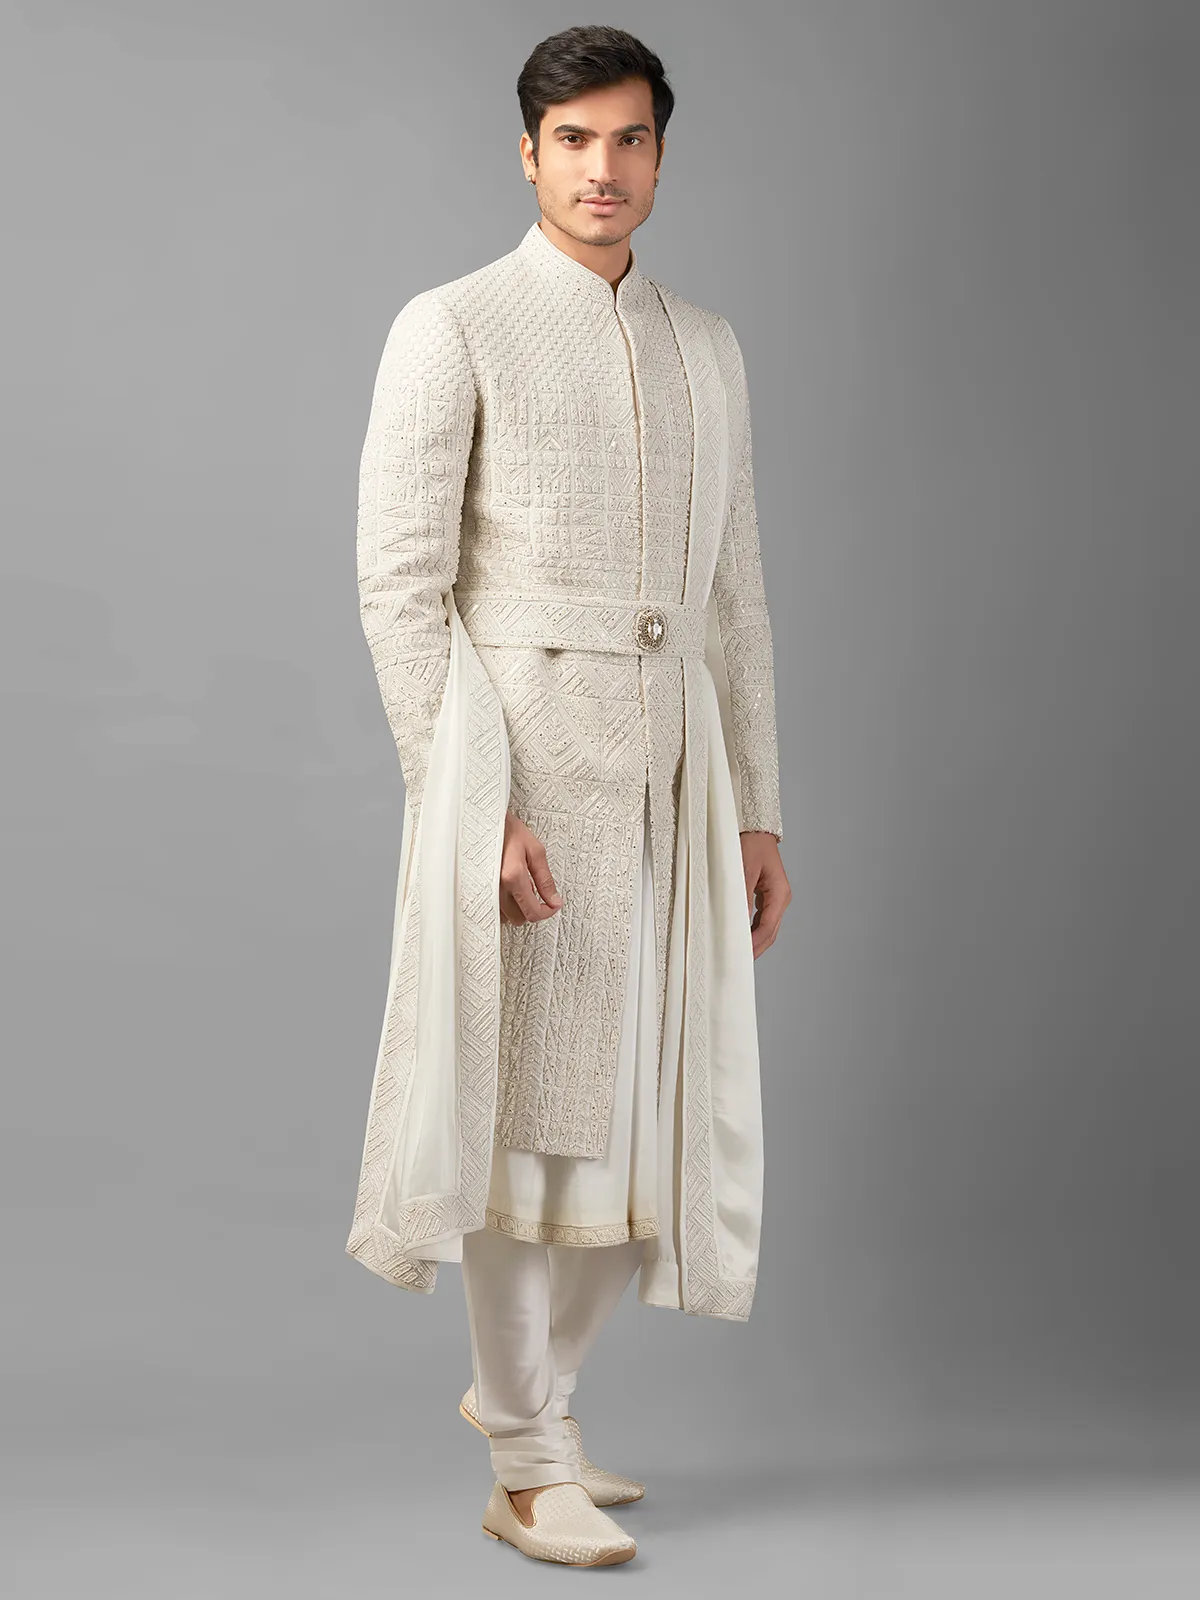 Off-white peshwai style groom sherwani